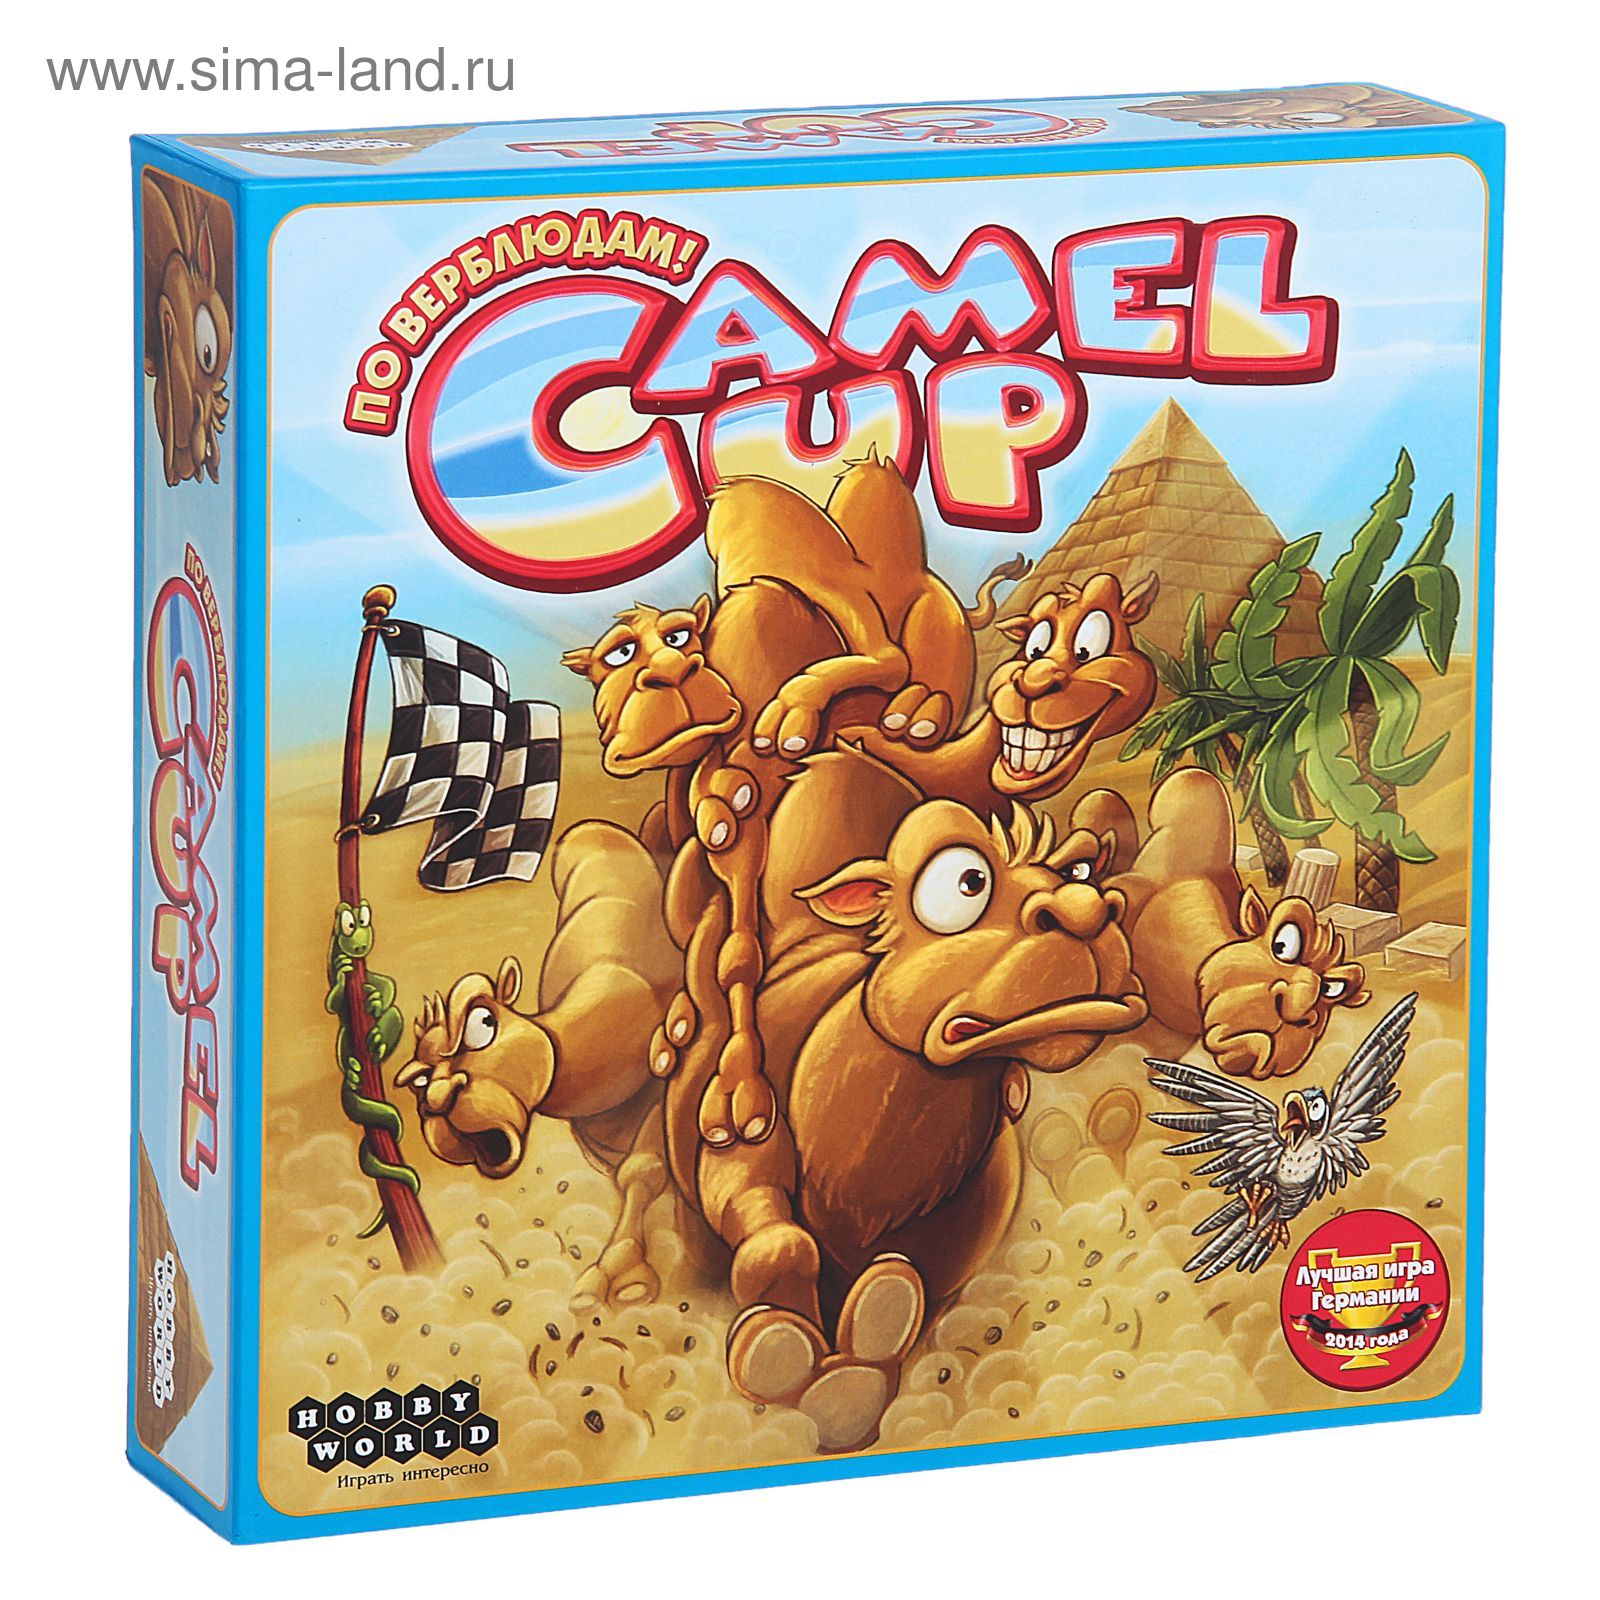 Camel up. Camel up настольная игра. Camel up настольная игра русское издание. Camel up PNP. Компоненты игры Камел ап.